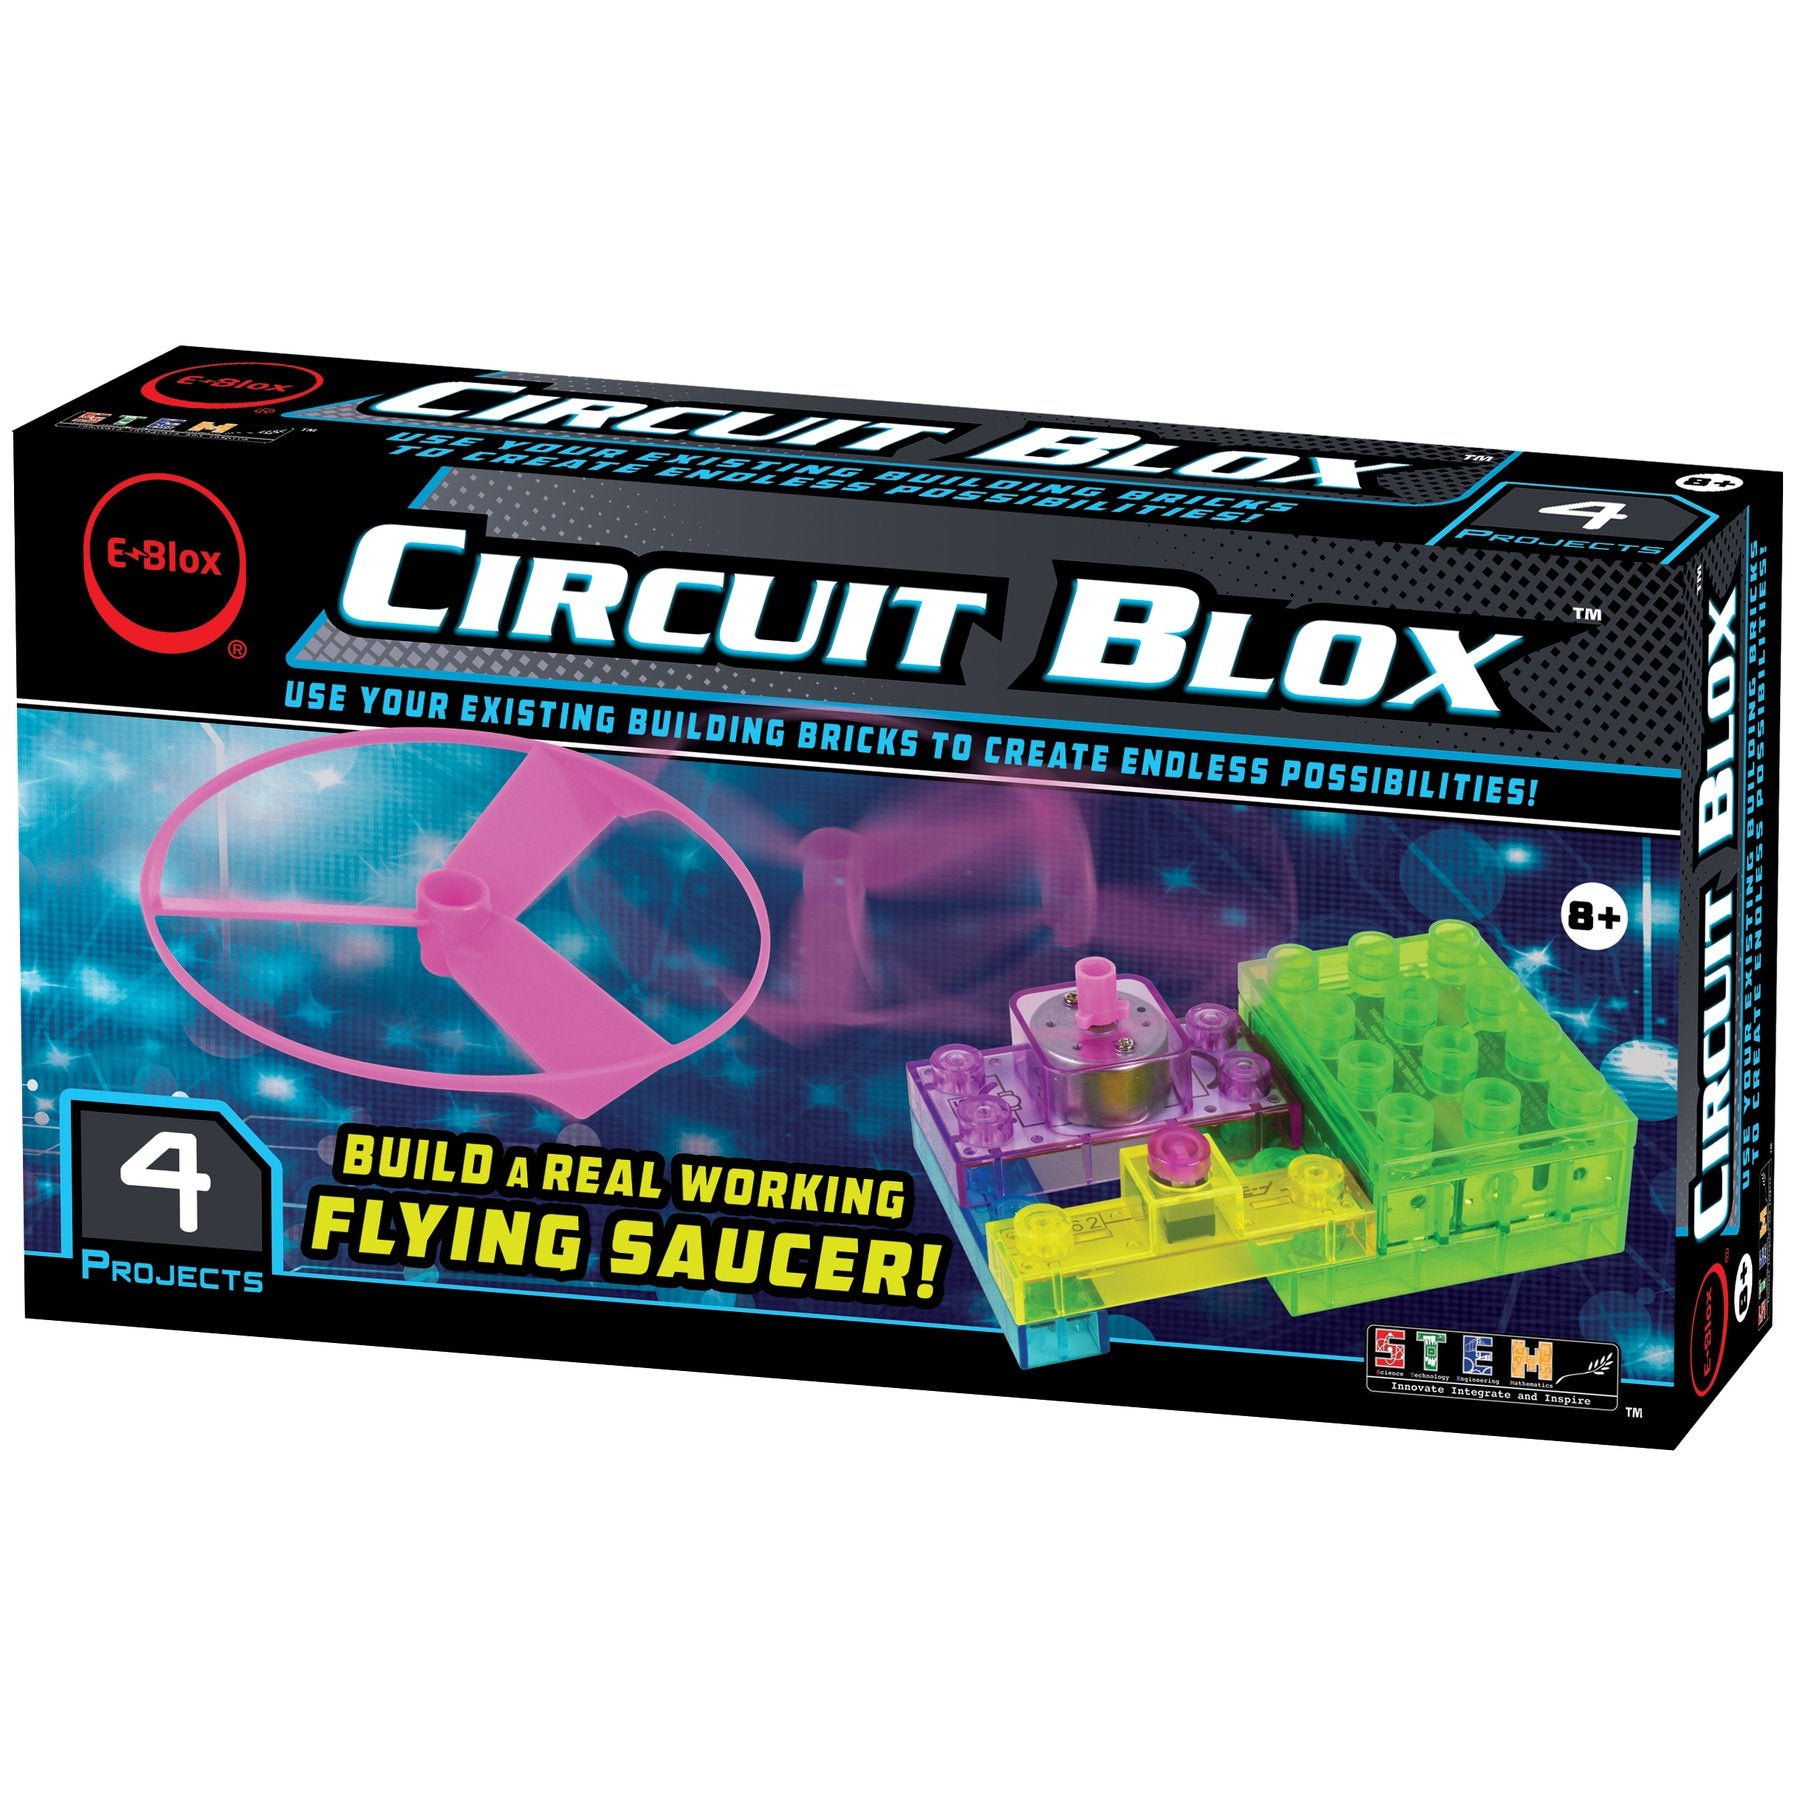 Circuit Blox 4 mini - E-Blox Circuit Board Building Kit